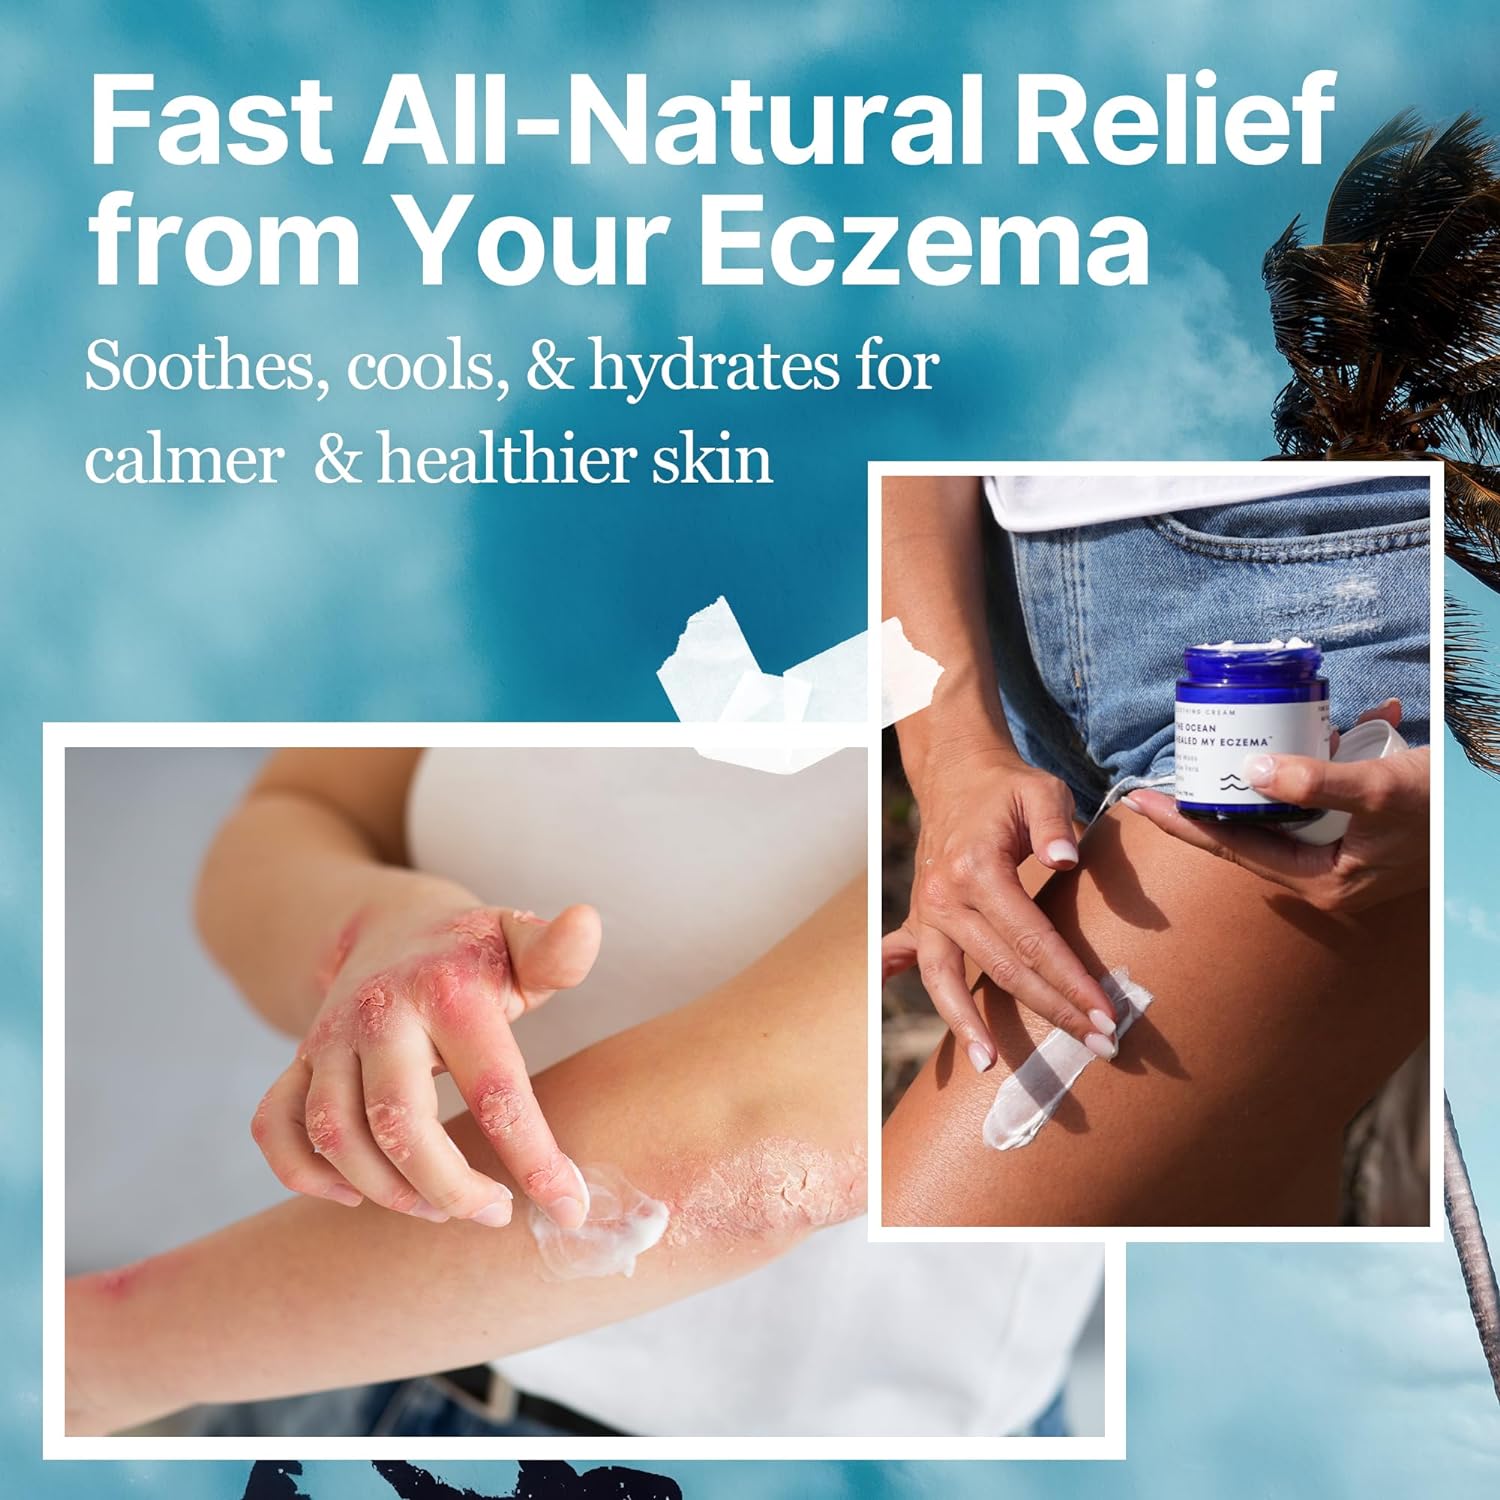 Sea Moss & Oats Eczema Cream | Hydrate Sensitive Skin, 4 Oz